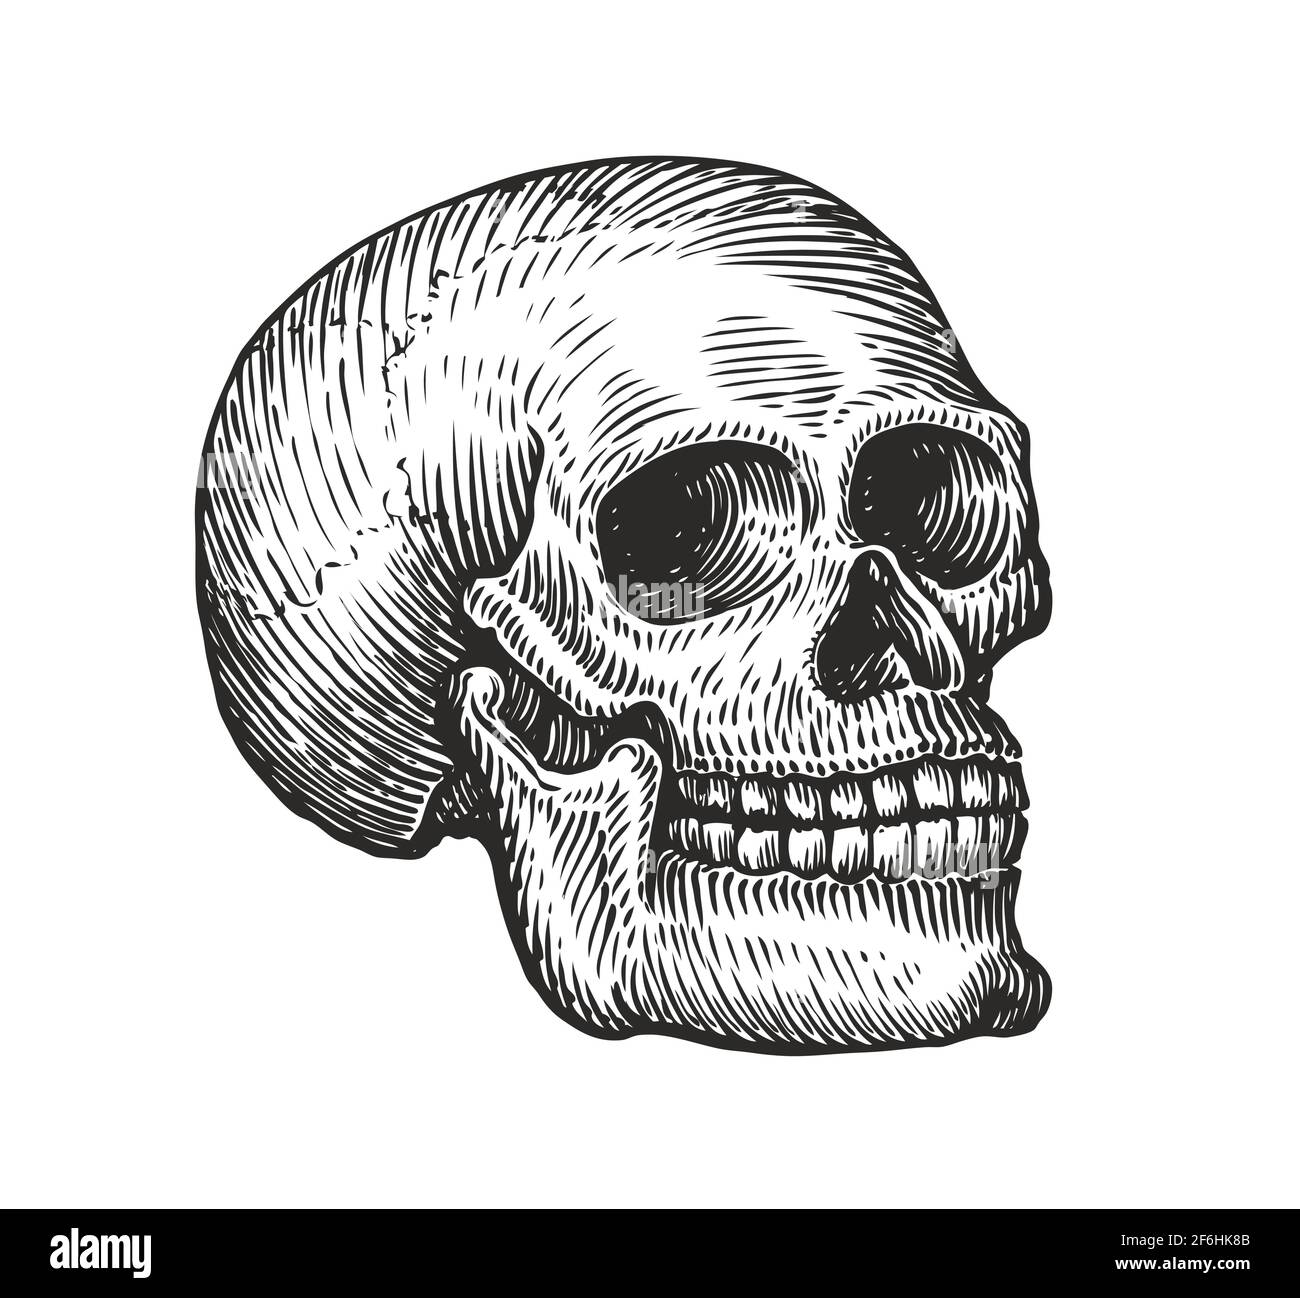 Brain and skull anatomy, illustration - Stock Image - C038/4321